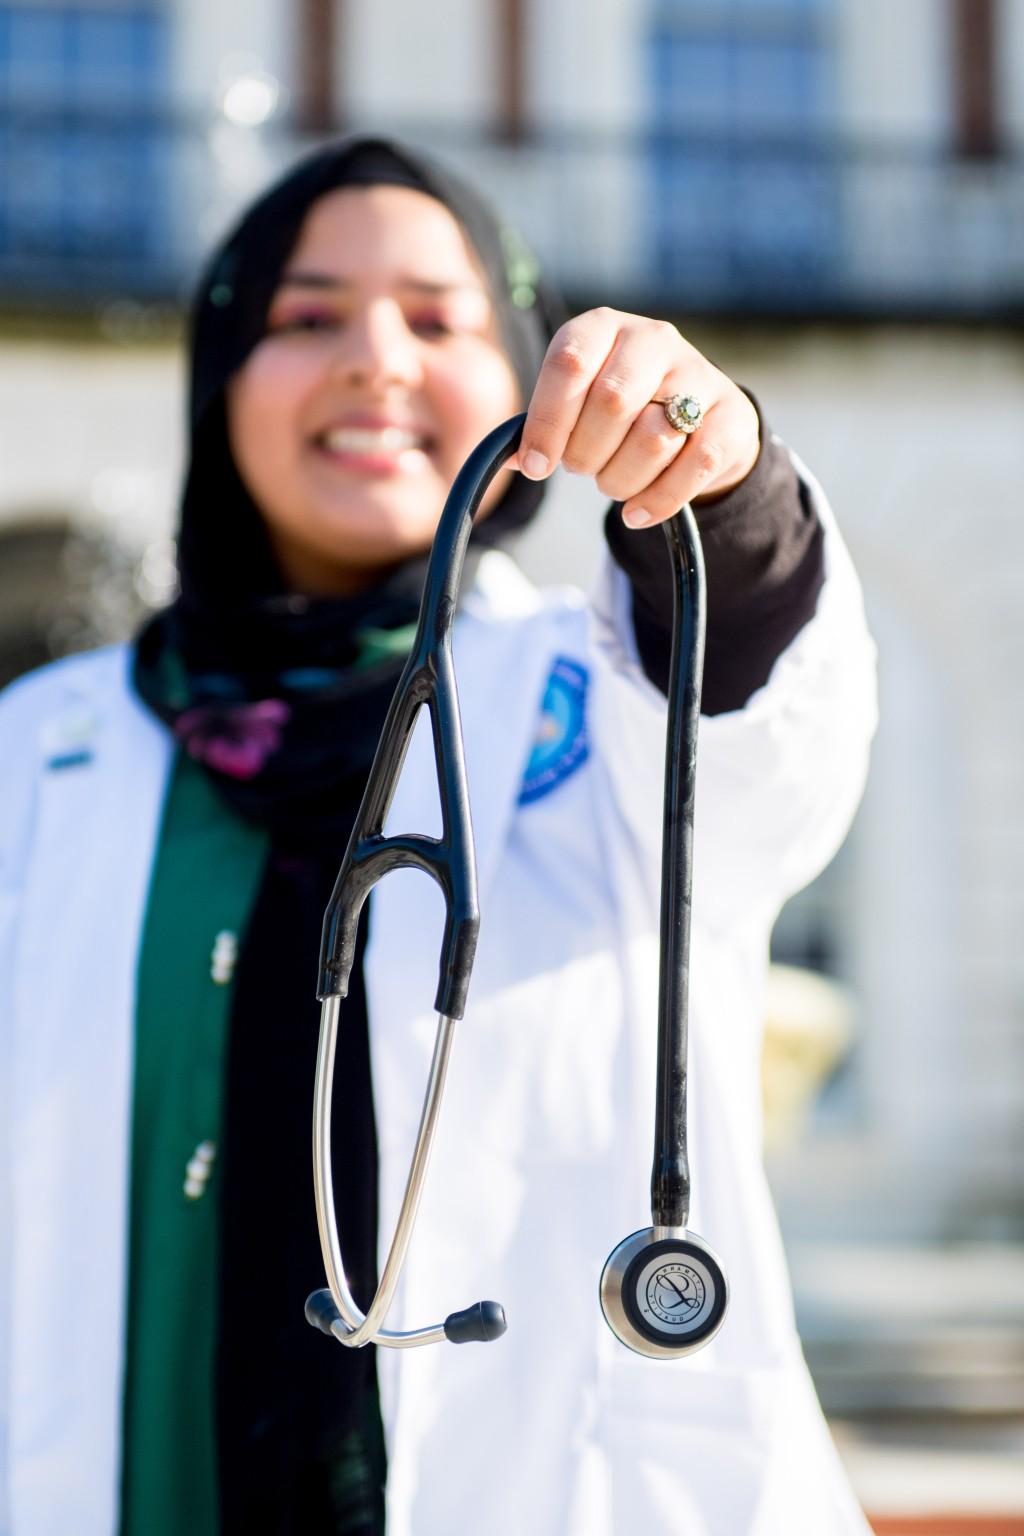 Fajar holds up her stethoscope